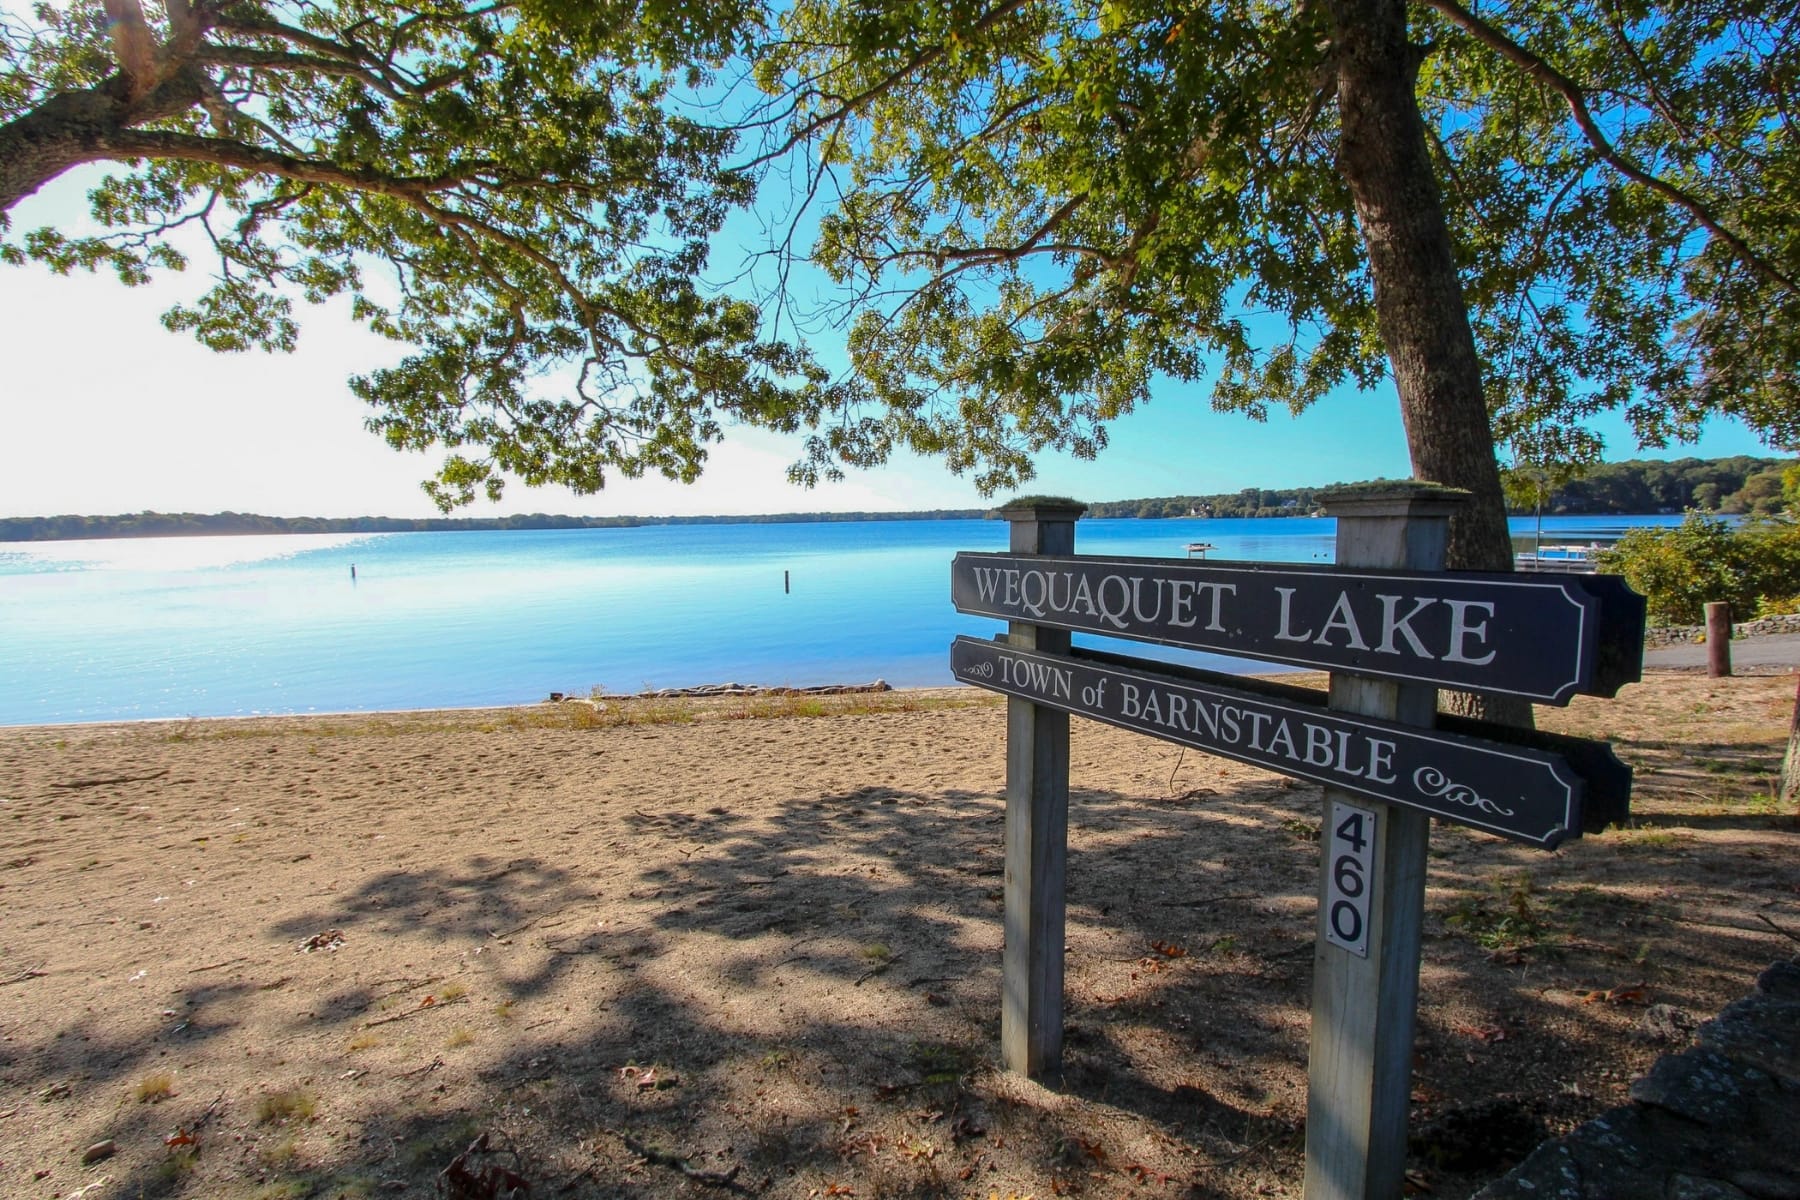 Swim, boat, kayak, canoe or fish at famous Wequaquet Lake